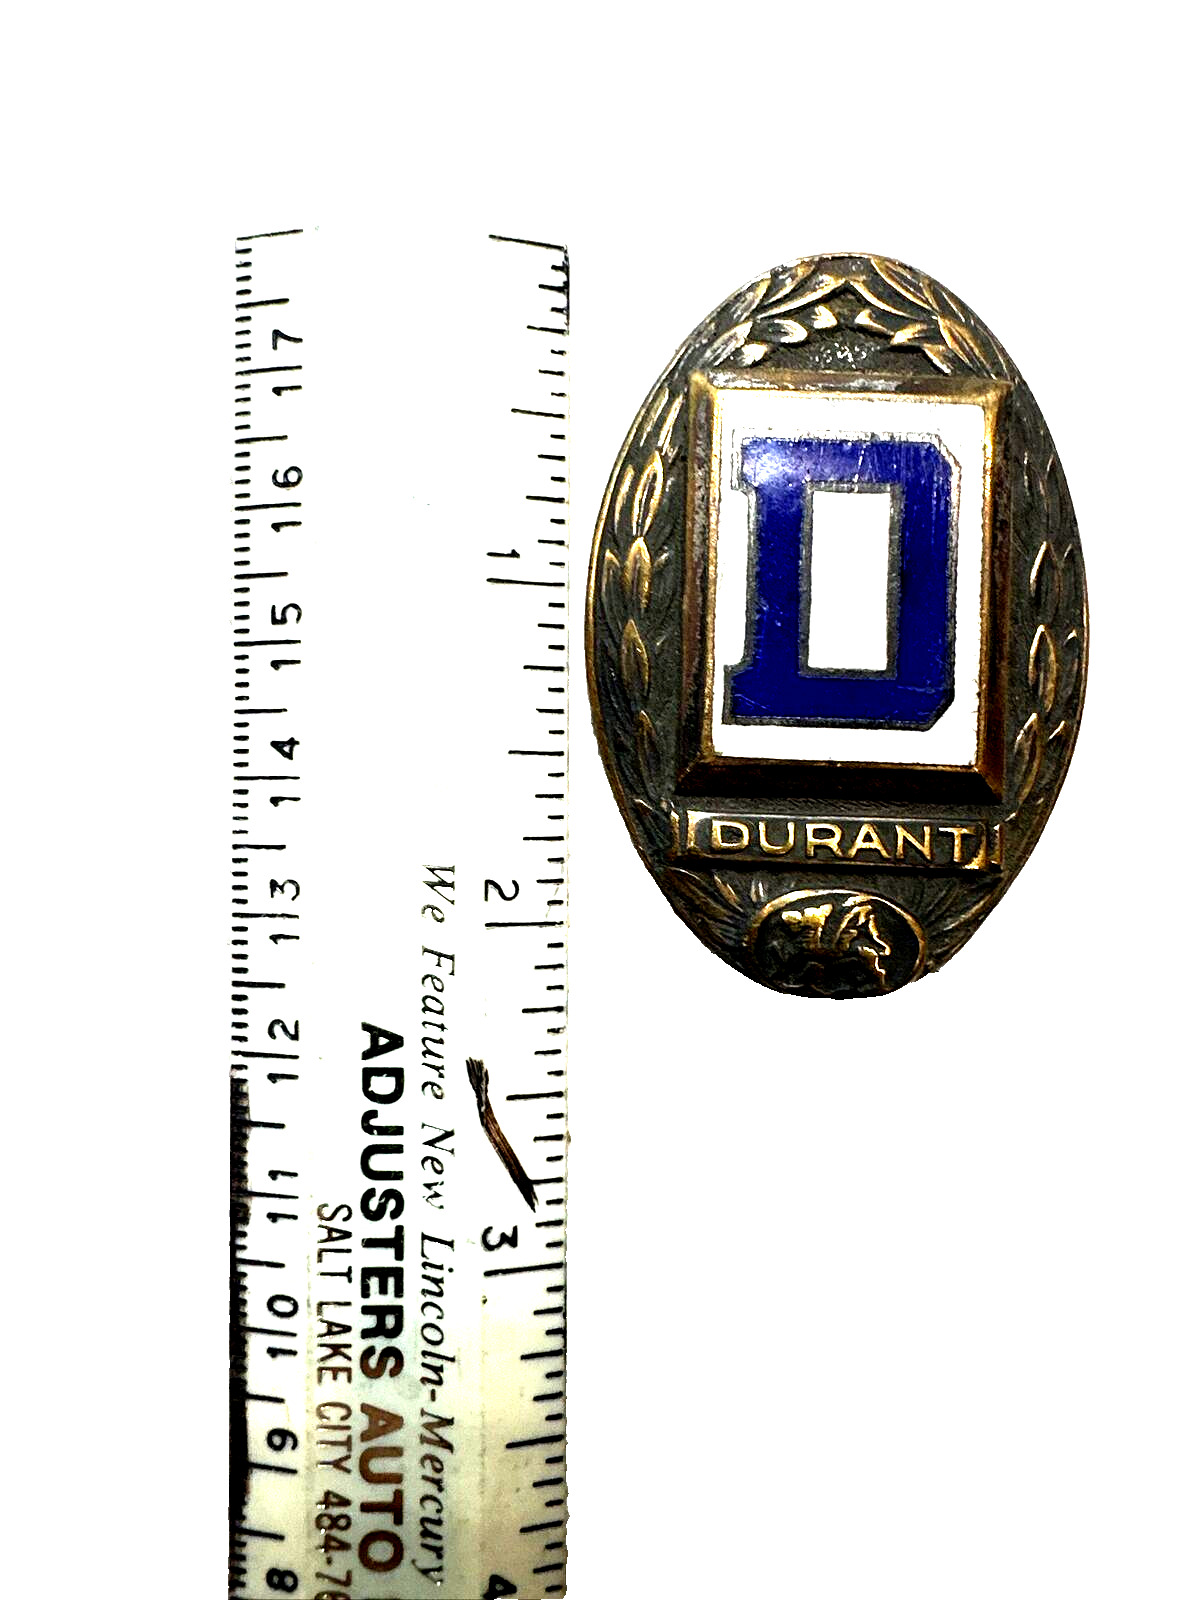 Rare 1928-29 Durant Radiator Emblem Antique Badge Grille D Logo